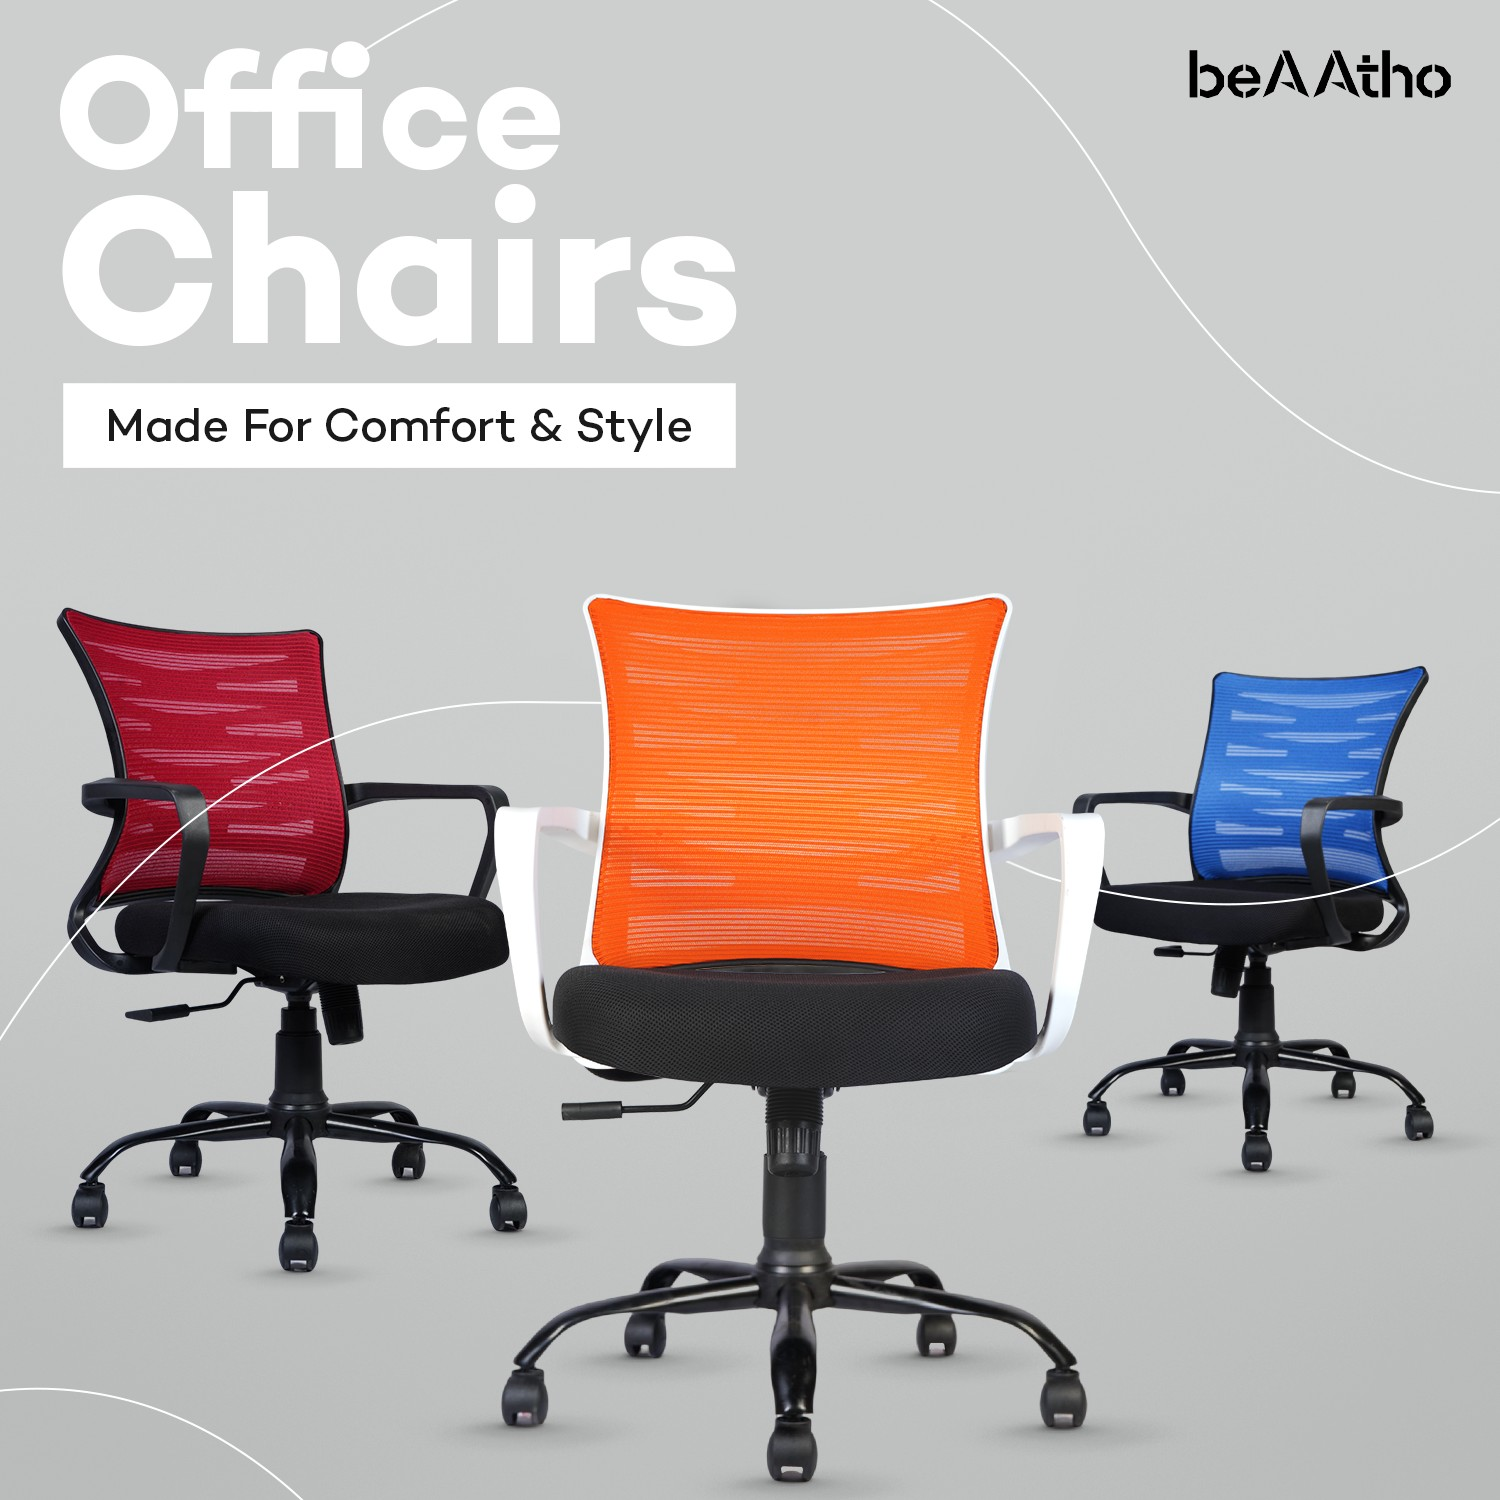 Office Revolving Chair @ Best Price - beAAtho